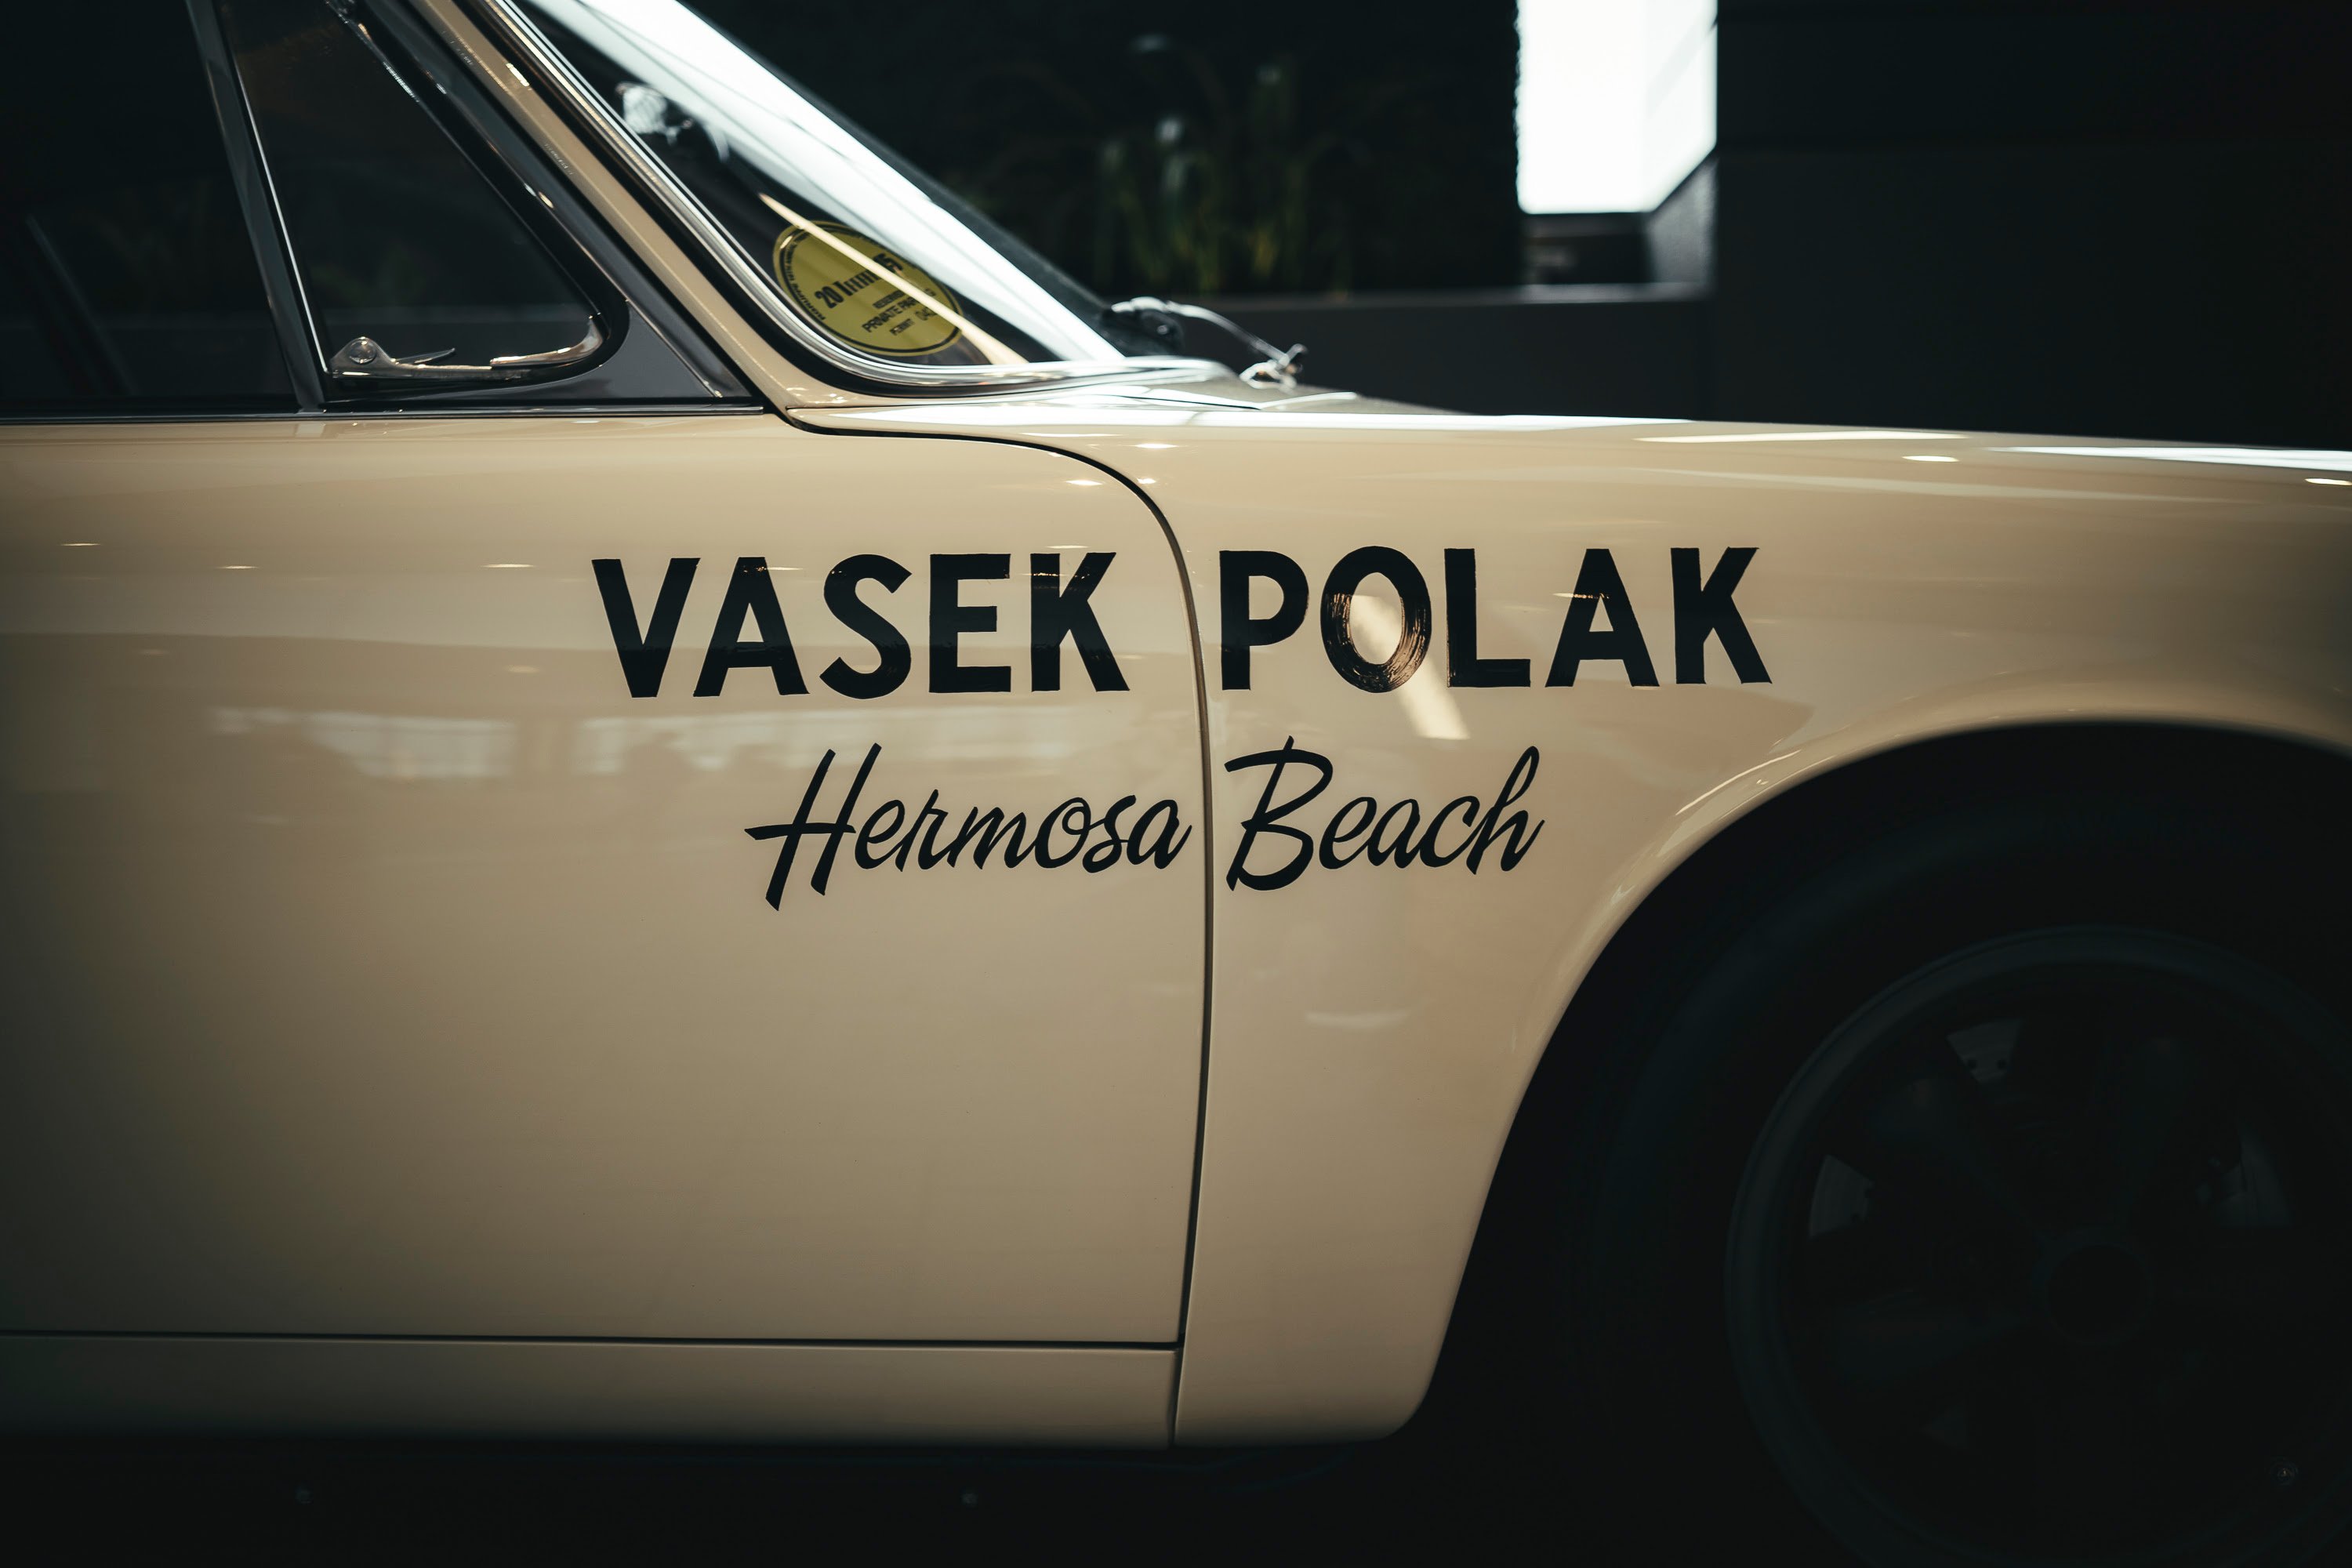 A classic Porsche 911 represeting the Vasek Polak dealership.